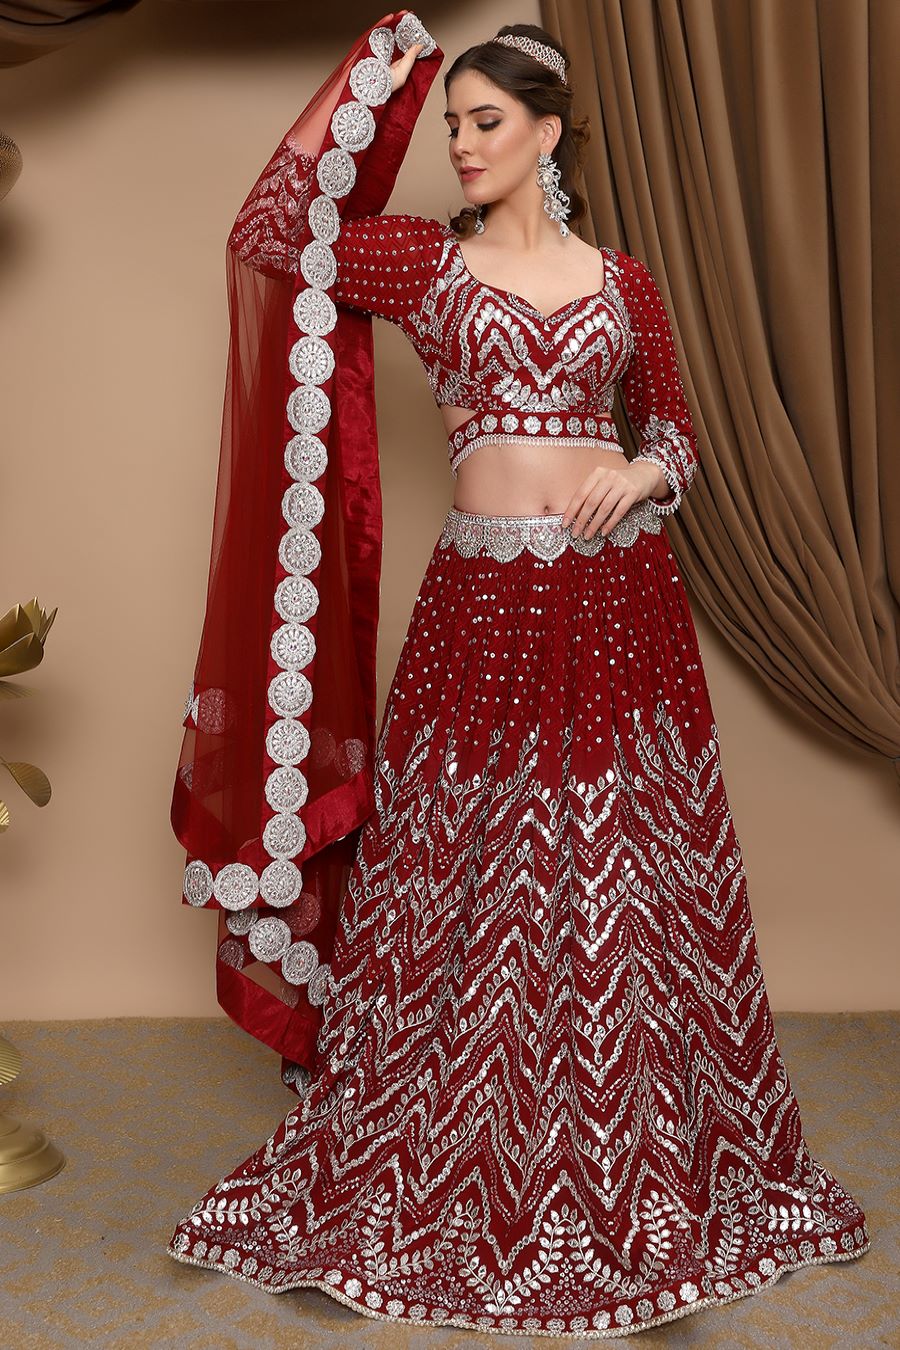 Lehenga#Red#Silver#exquisite#Royal#Vintage#Timeless#Graceful#Couture |  Indian wedding fashion, Indian look, Indian bridal lehenga